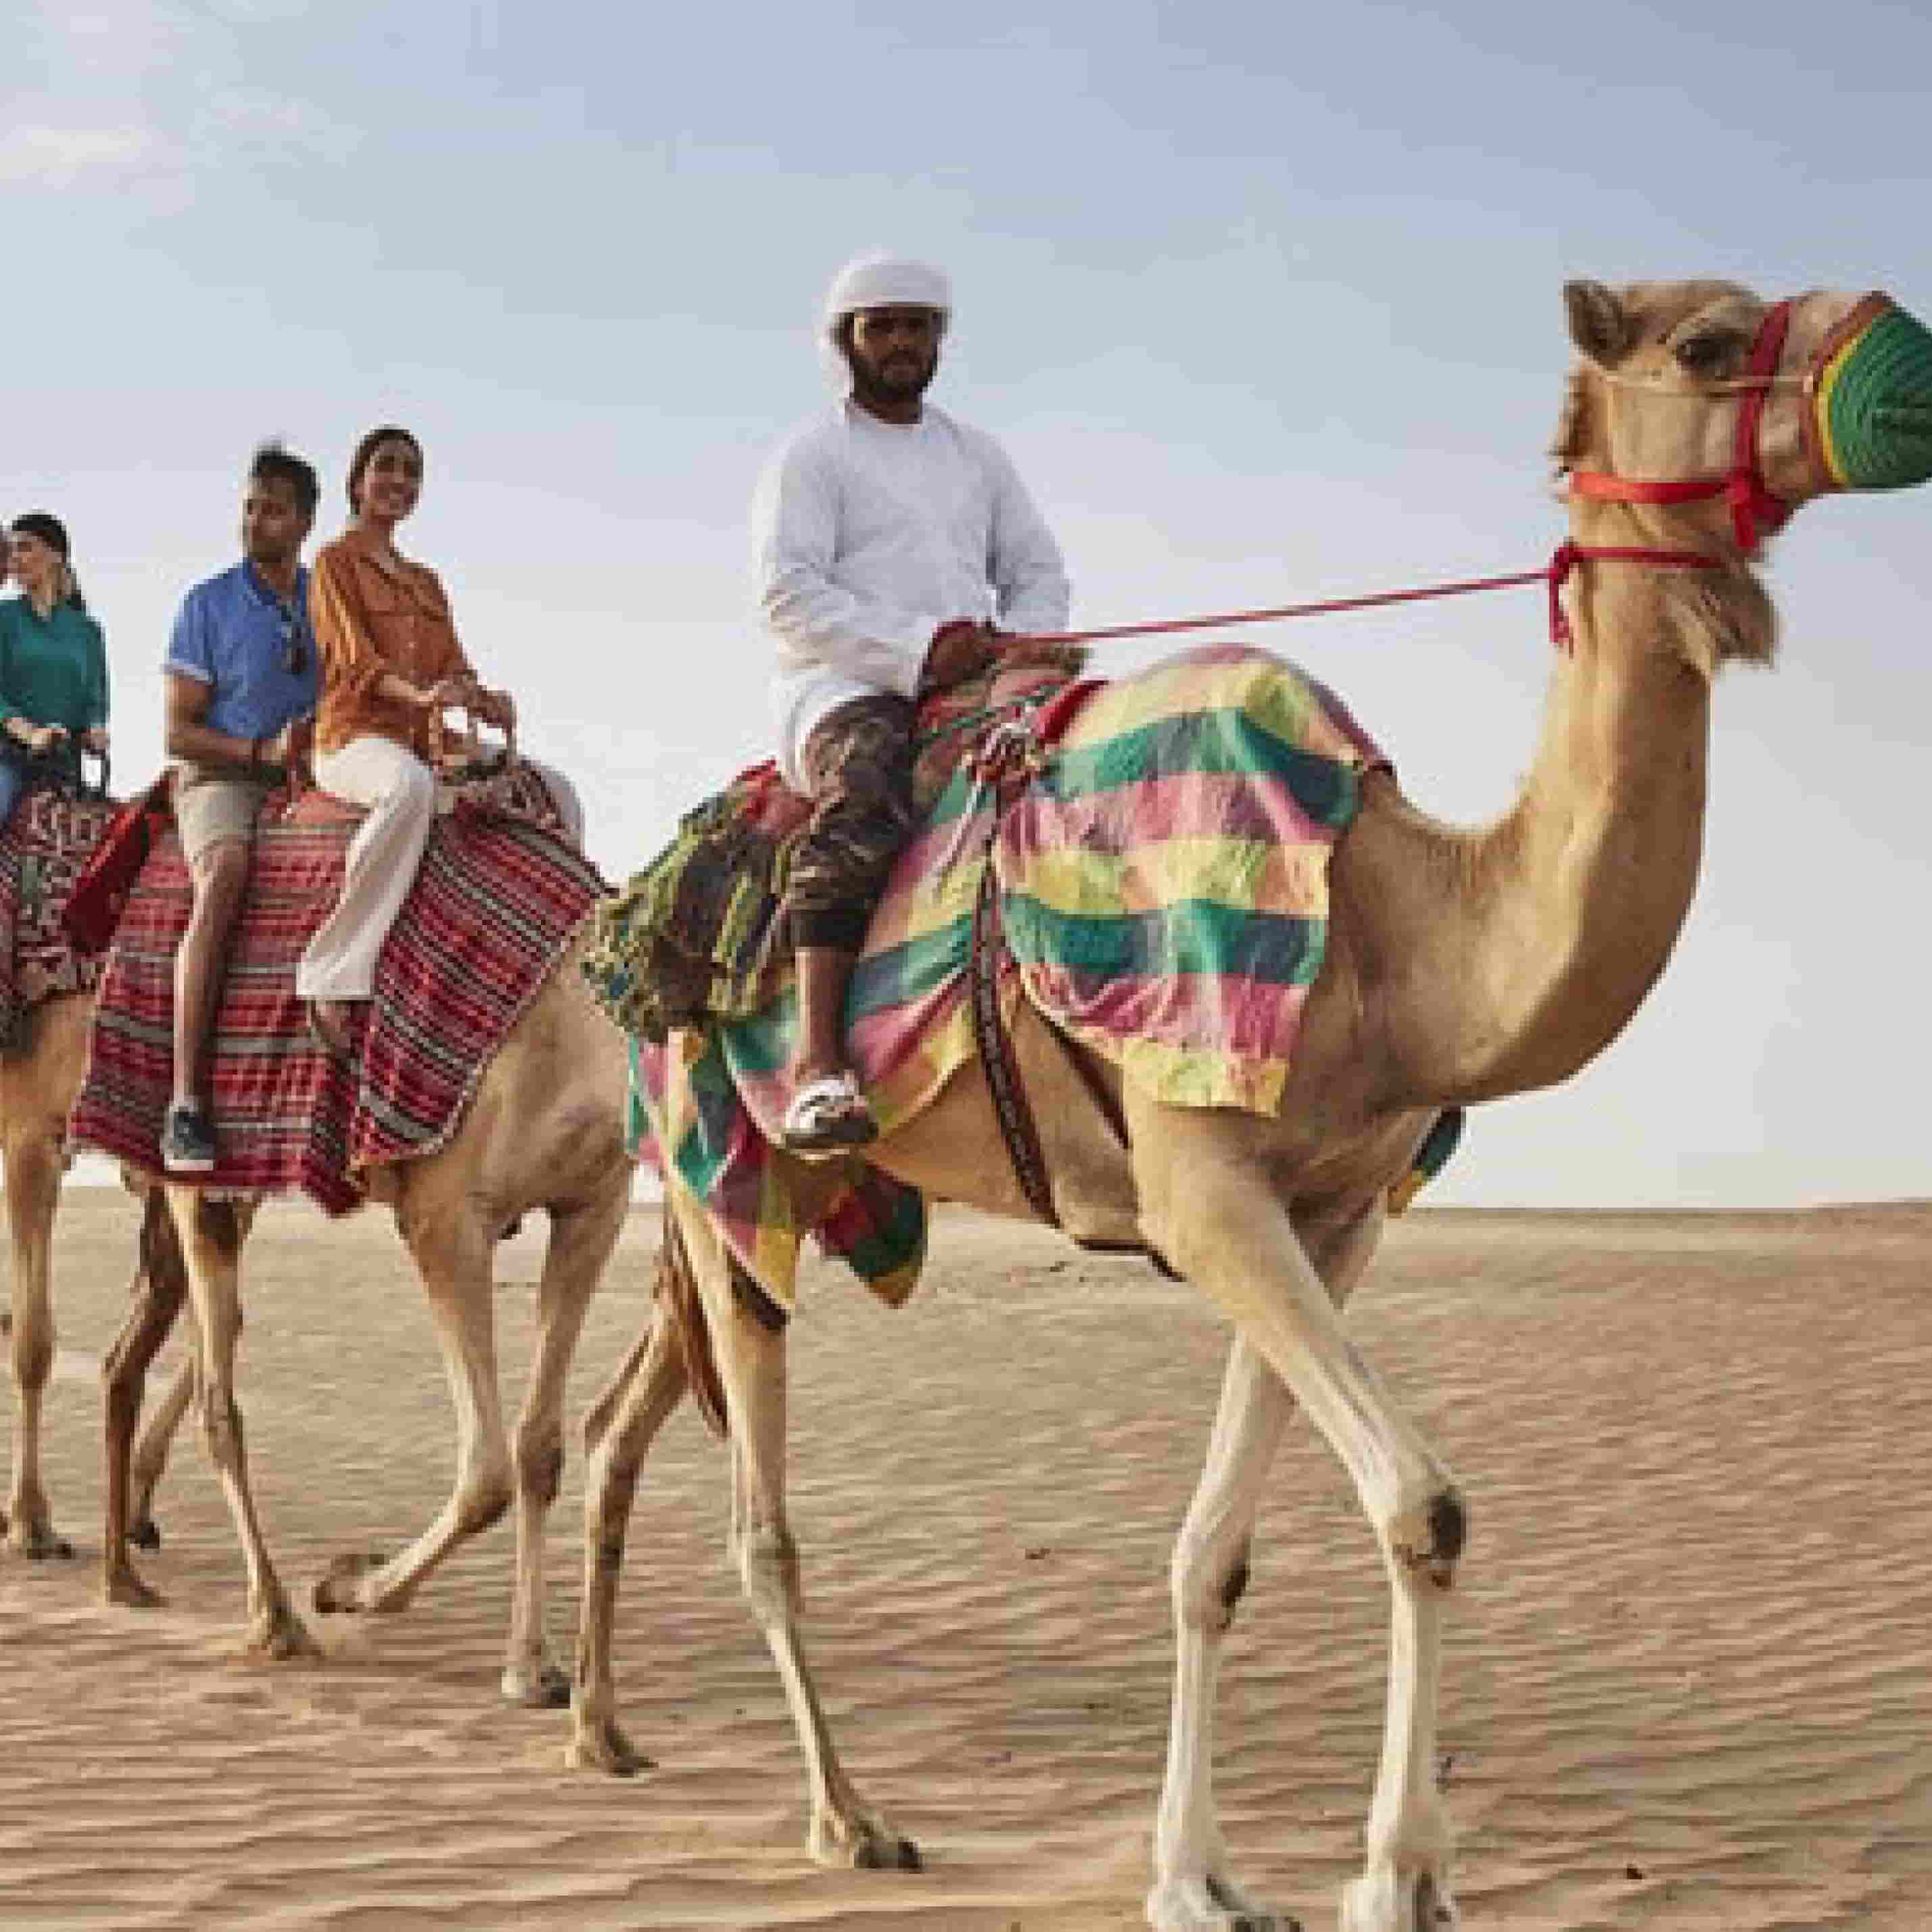 Camel riding adventure over the desert